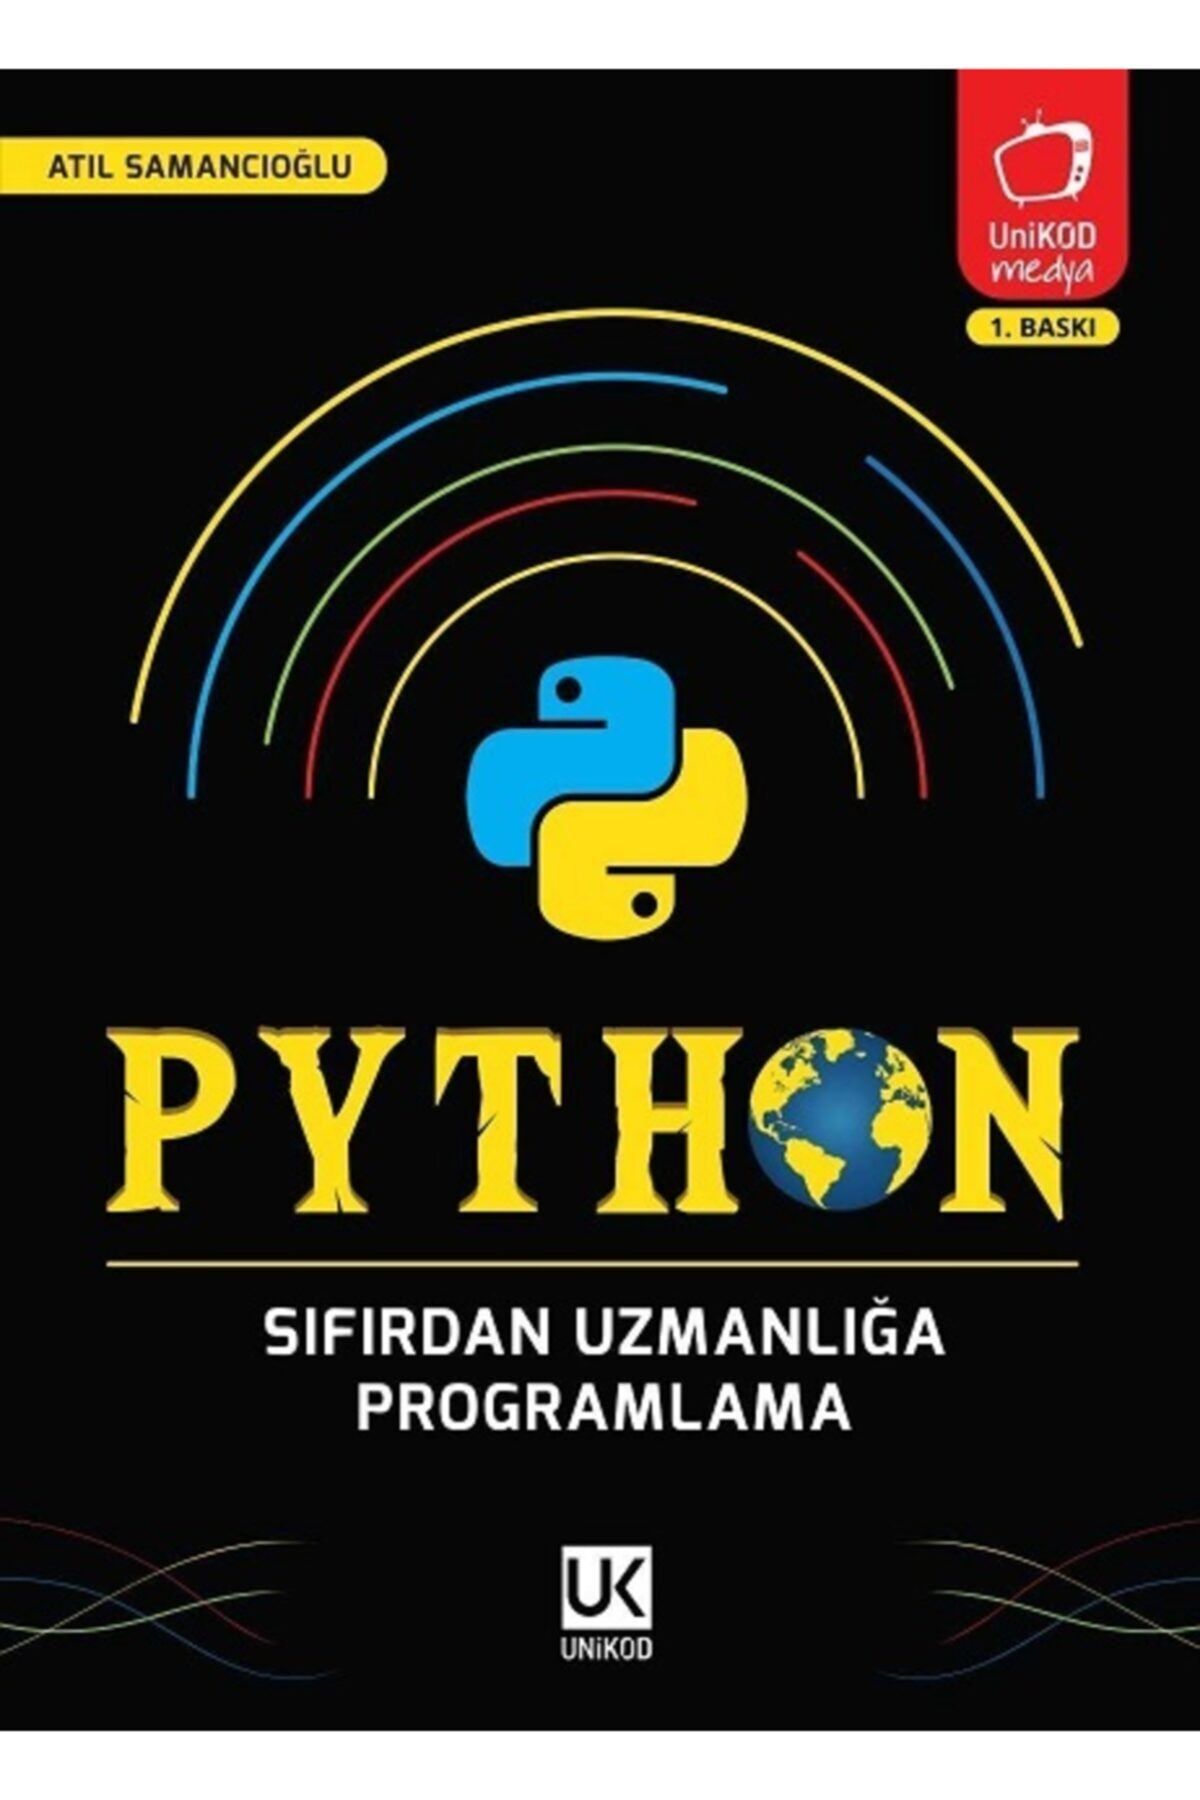 Unikod Sıfırdan Uzmanlığa Python Programlama